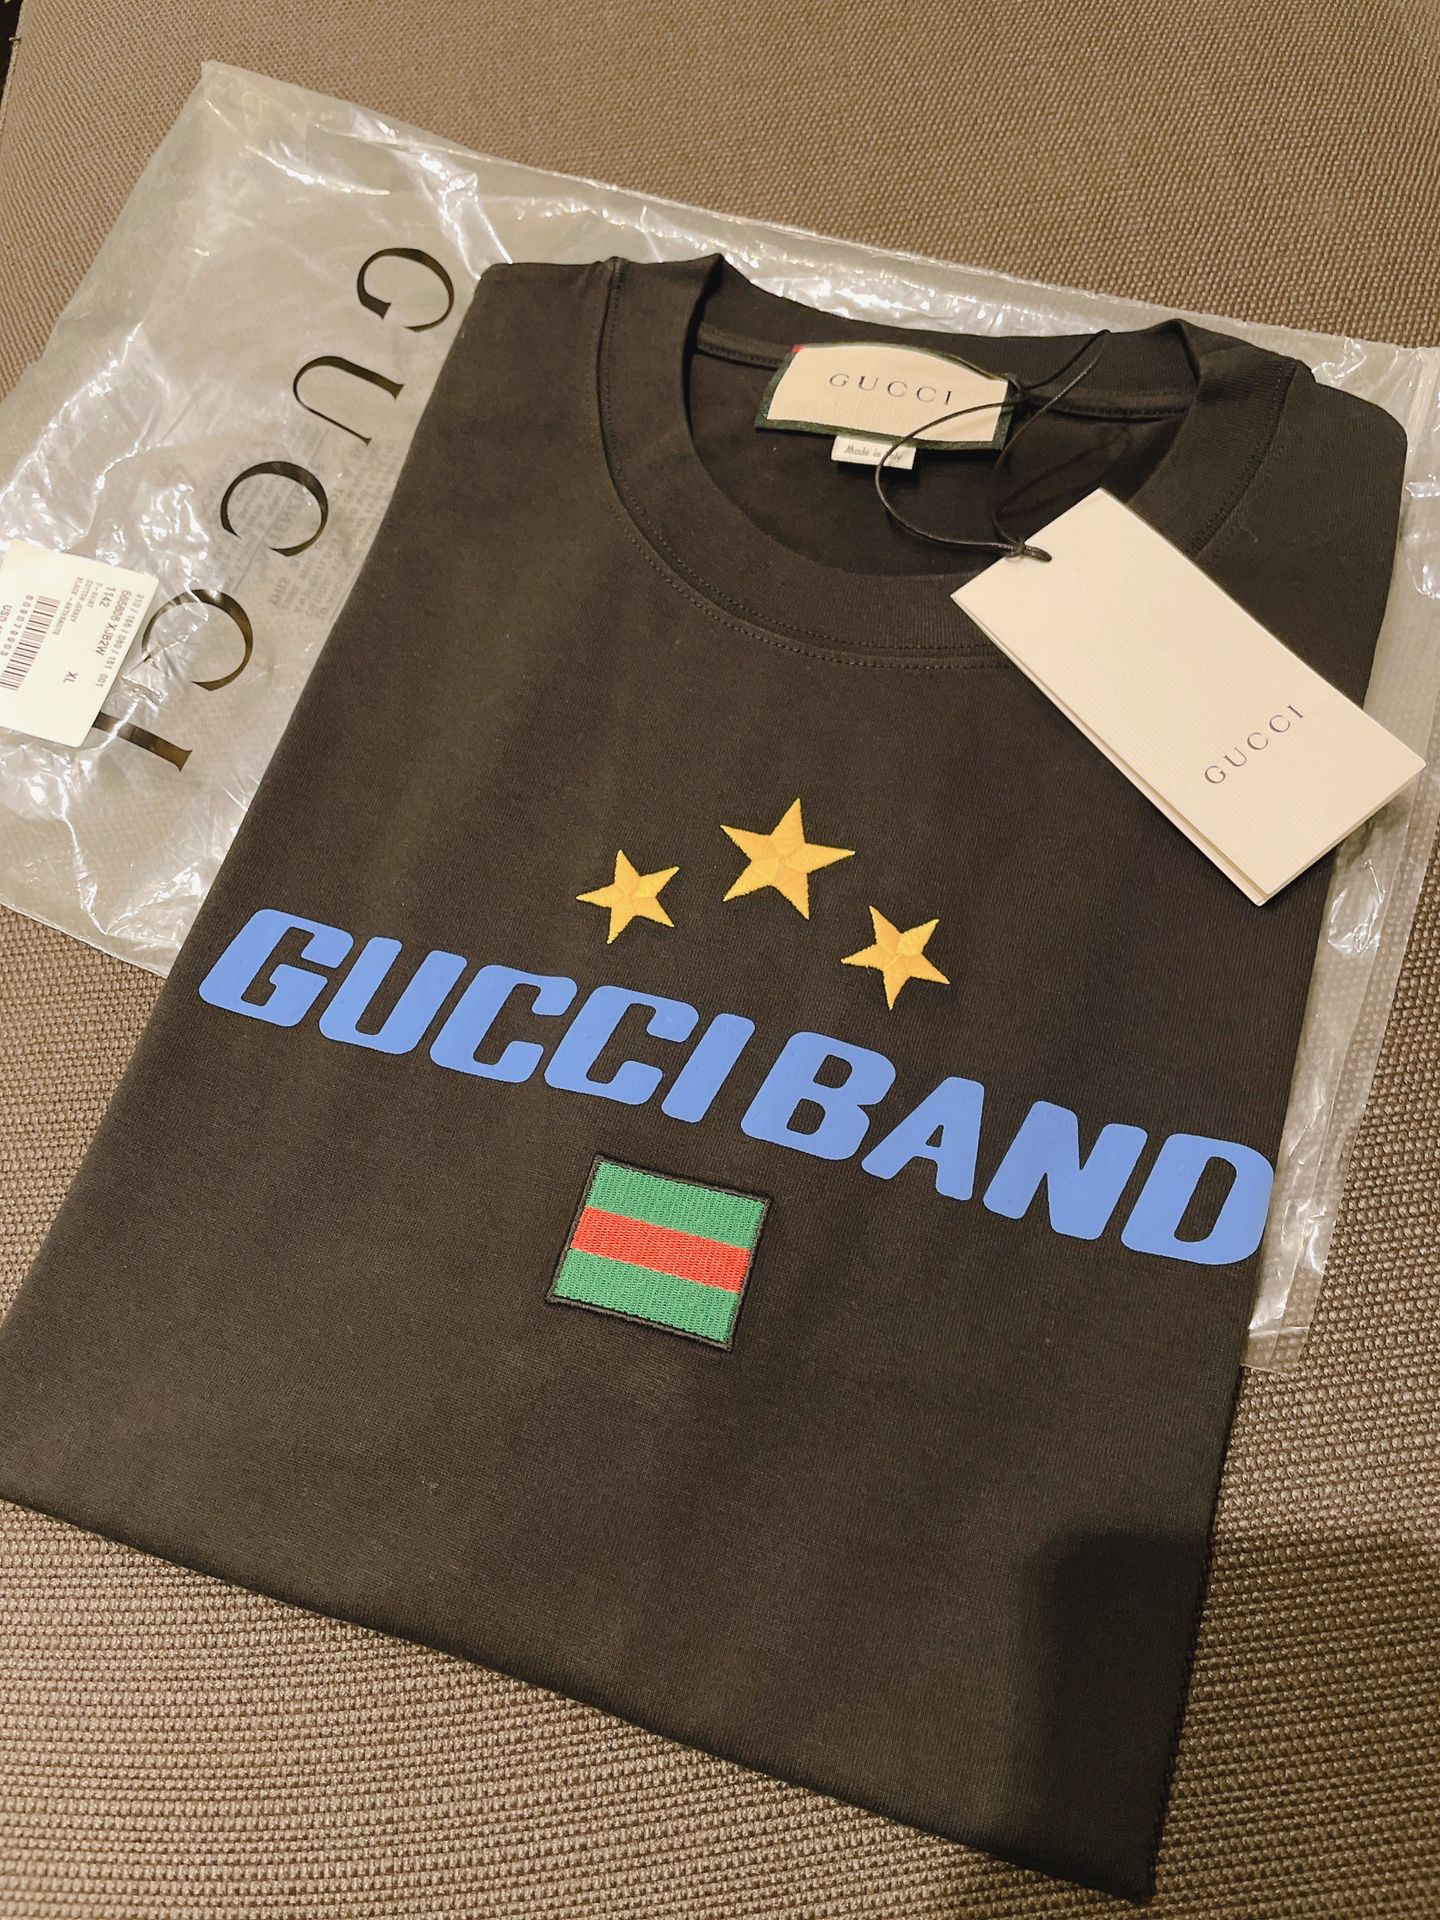 New- Gucci Men’s T-shirt ( Size M, XL)